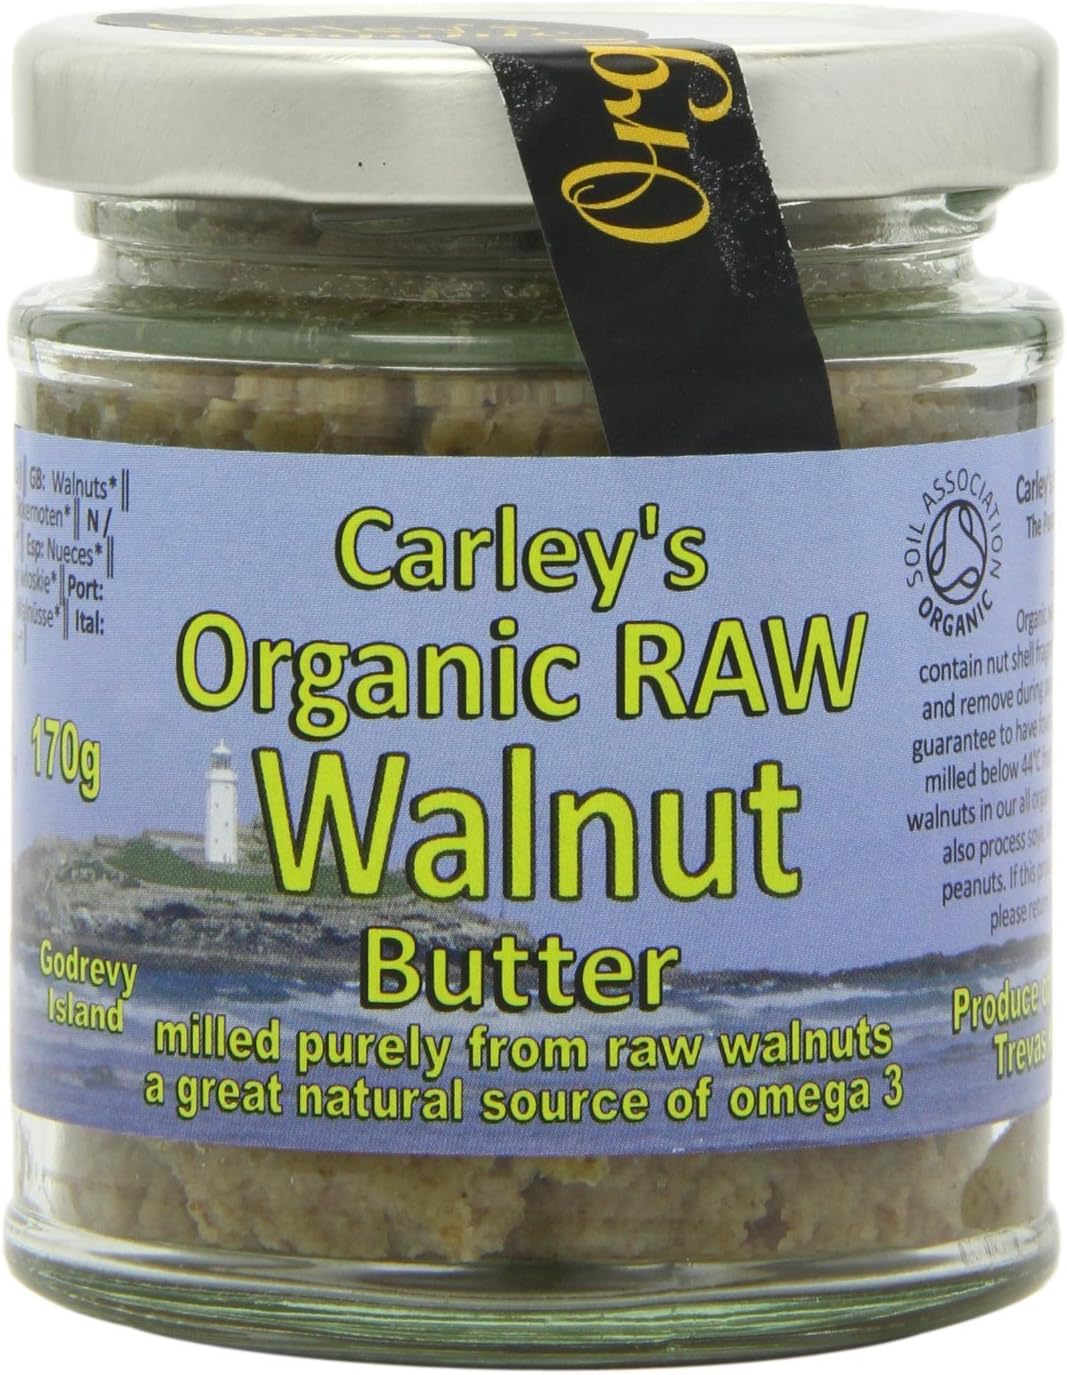 Carley’s Organic Raw Walnut Butte...